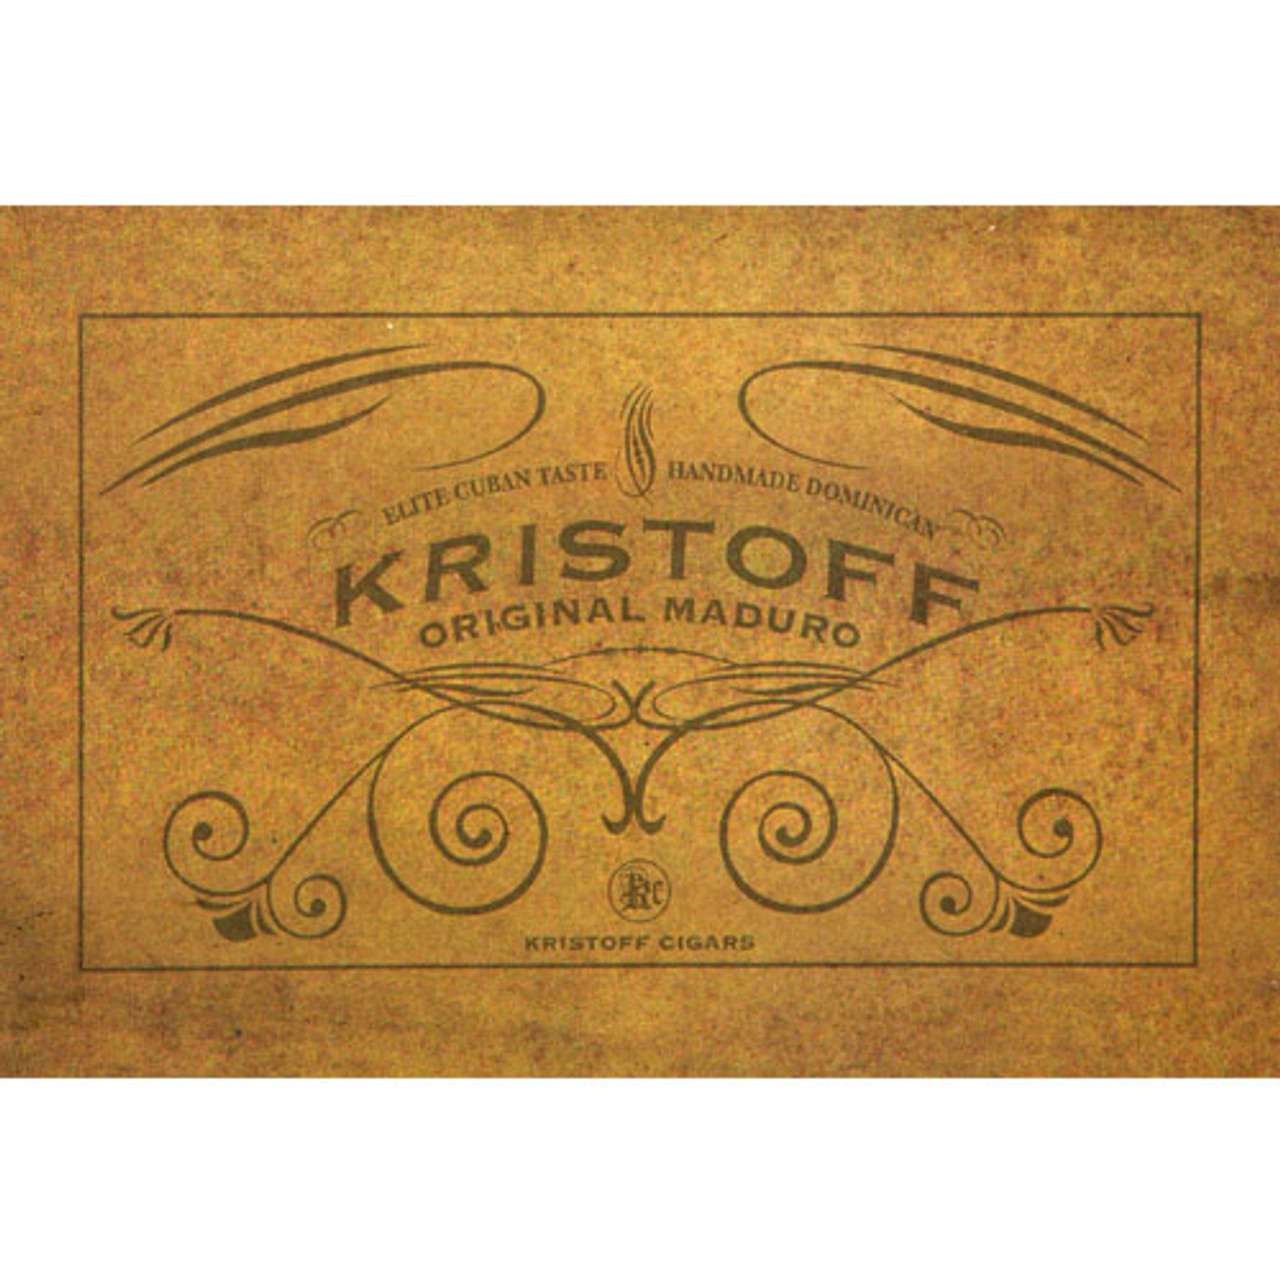 Kristoff Original Maduro Robusto Cigars - 5.5 x 54 (Box of 20)